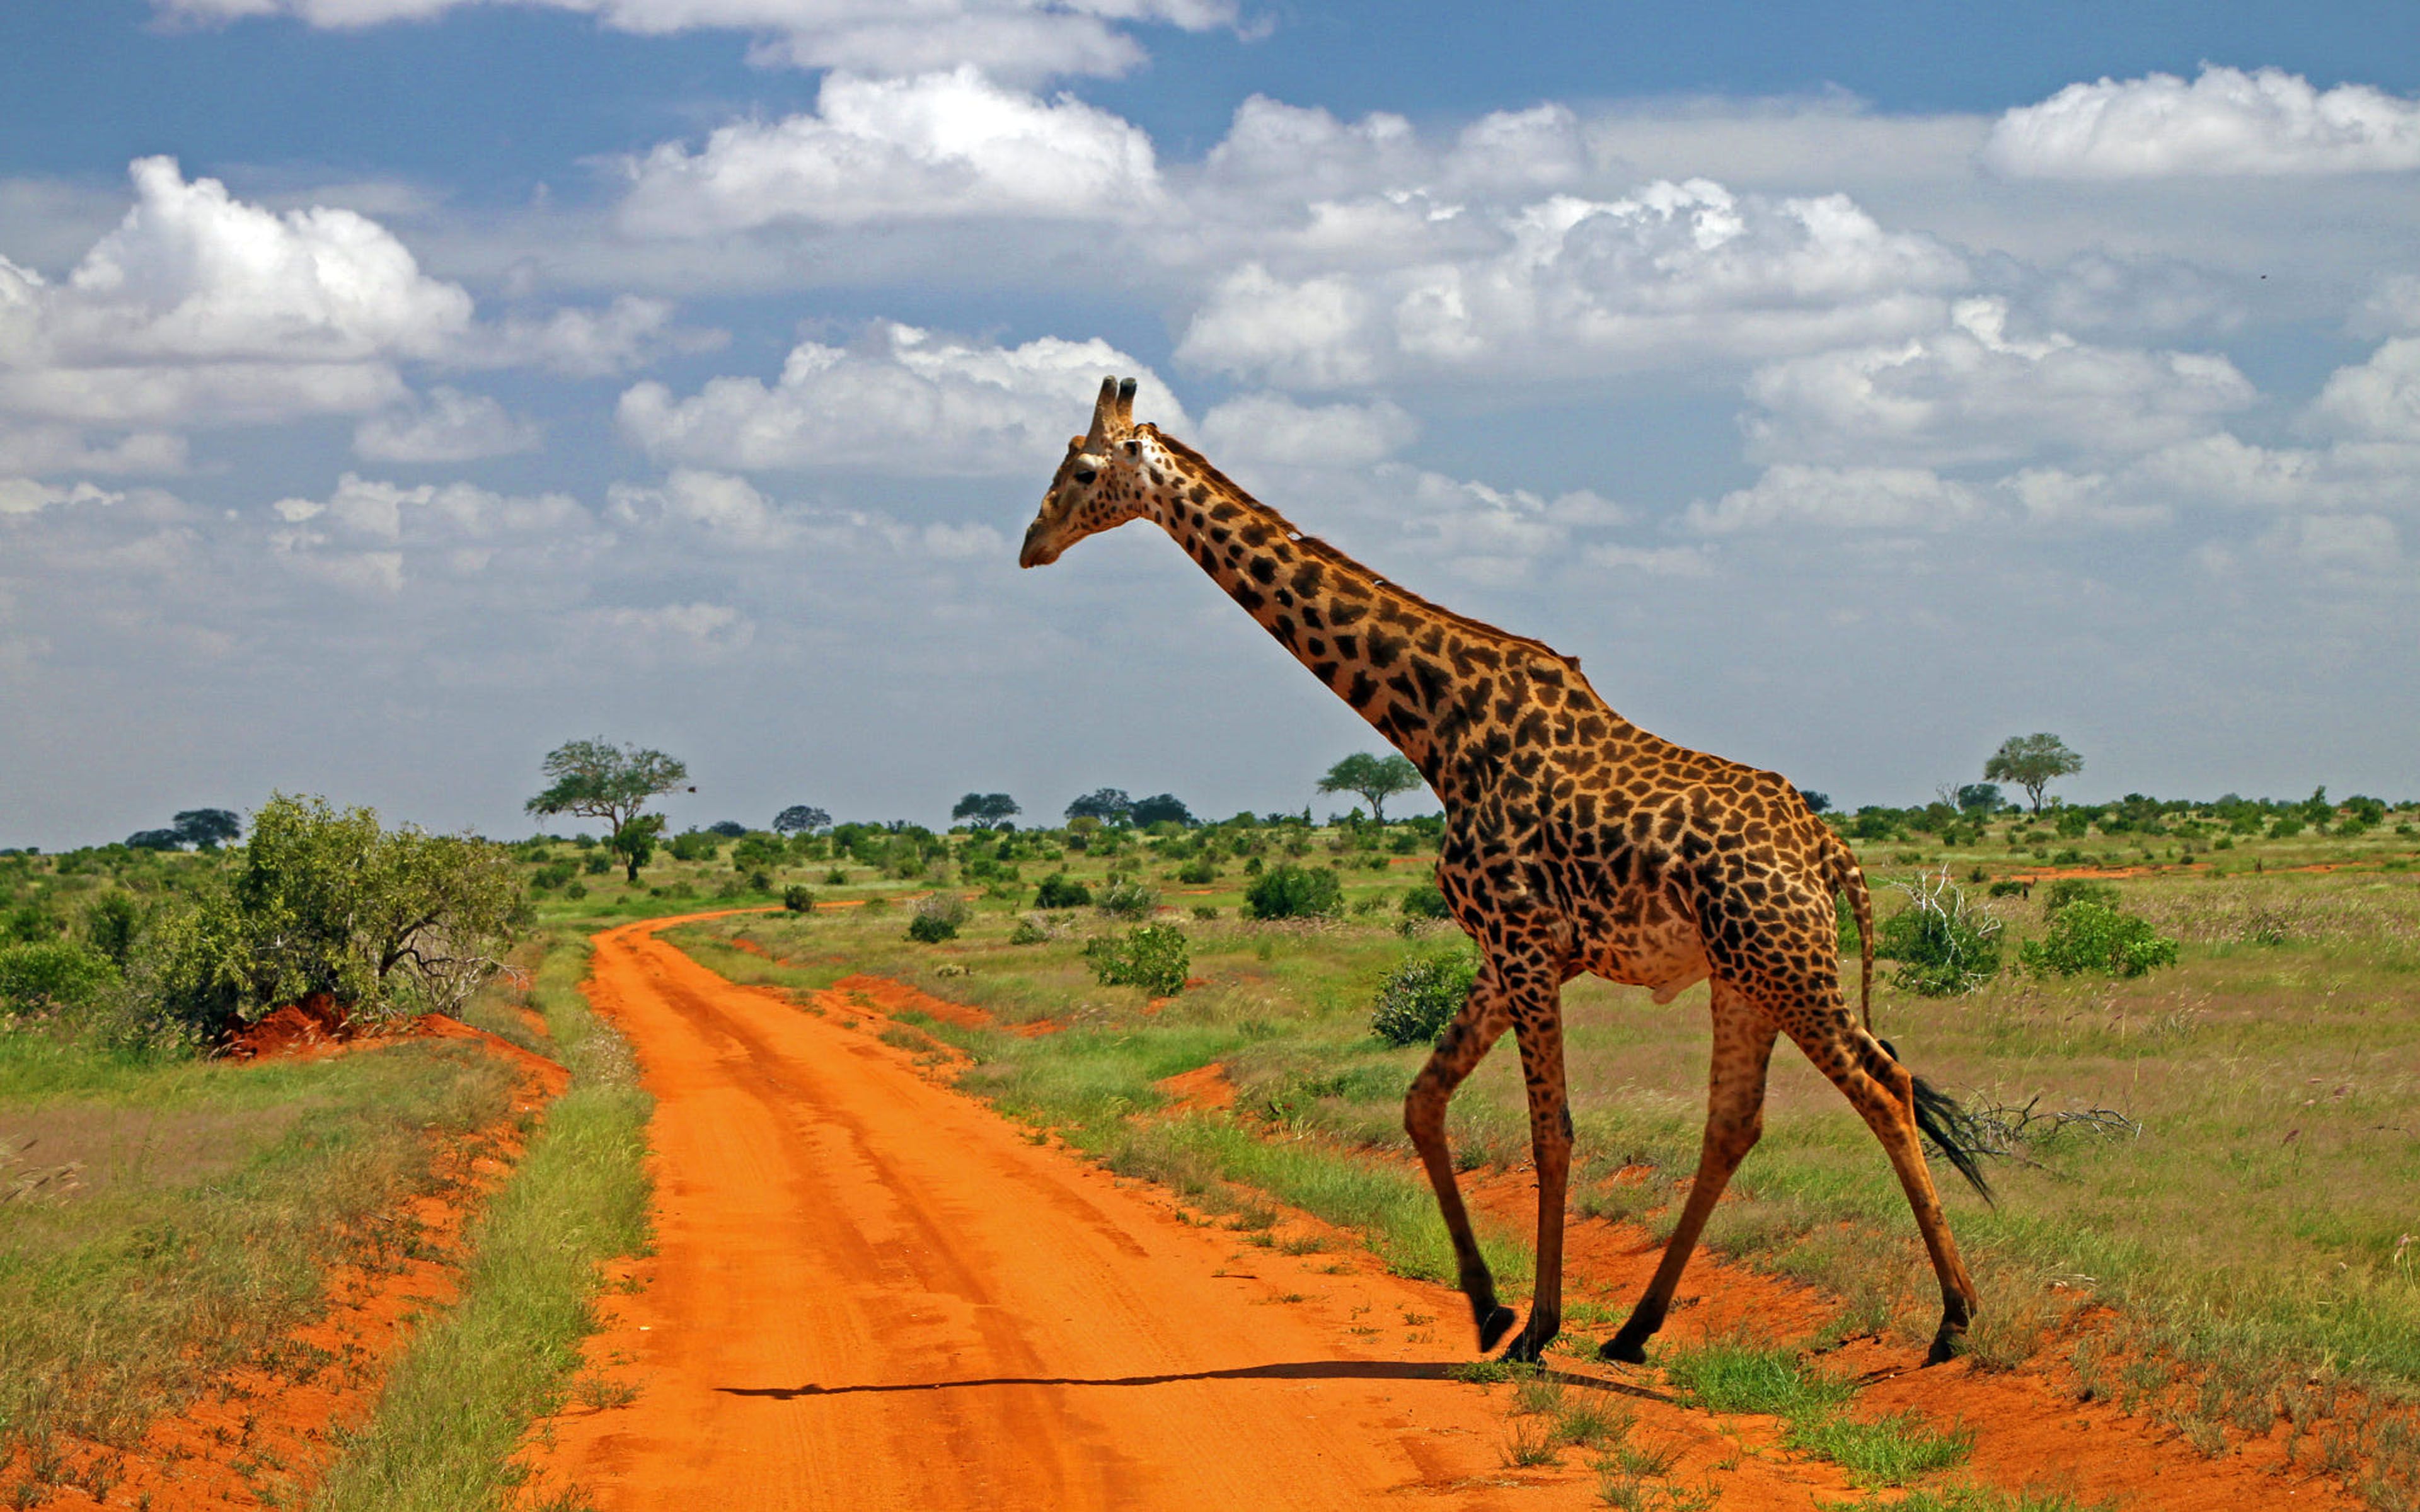 Giraffe Family Giraffidae The Tallest Living Land Animal And Largest Survivor Wild Animals From Africa 4k Ultra HD Wallpaper For Desktop Laptop, Wallpaper13.com